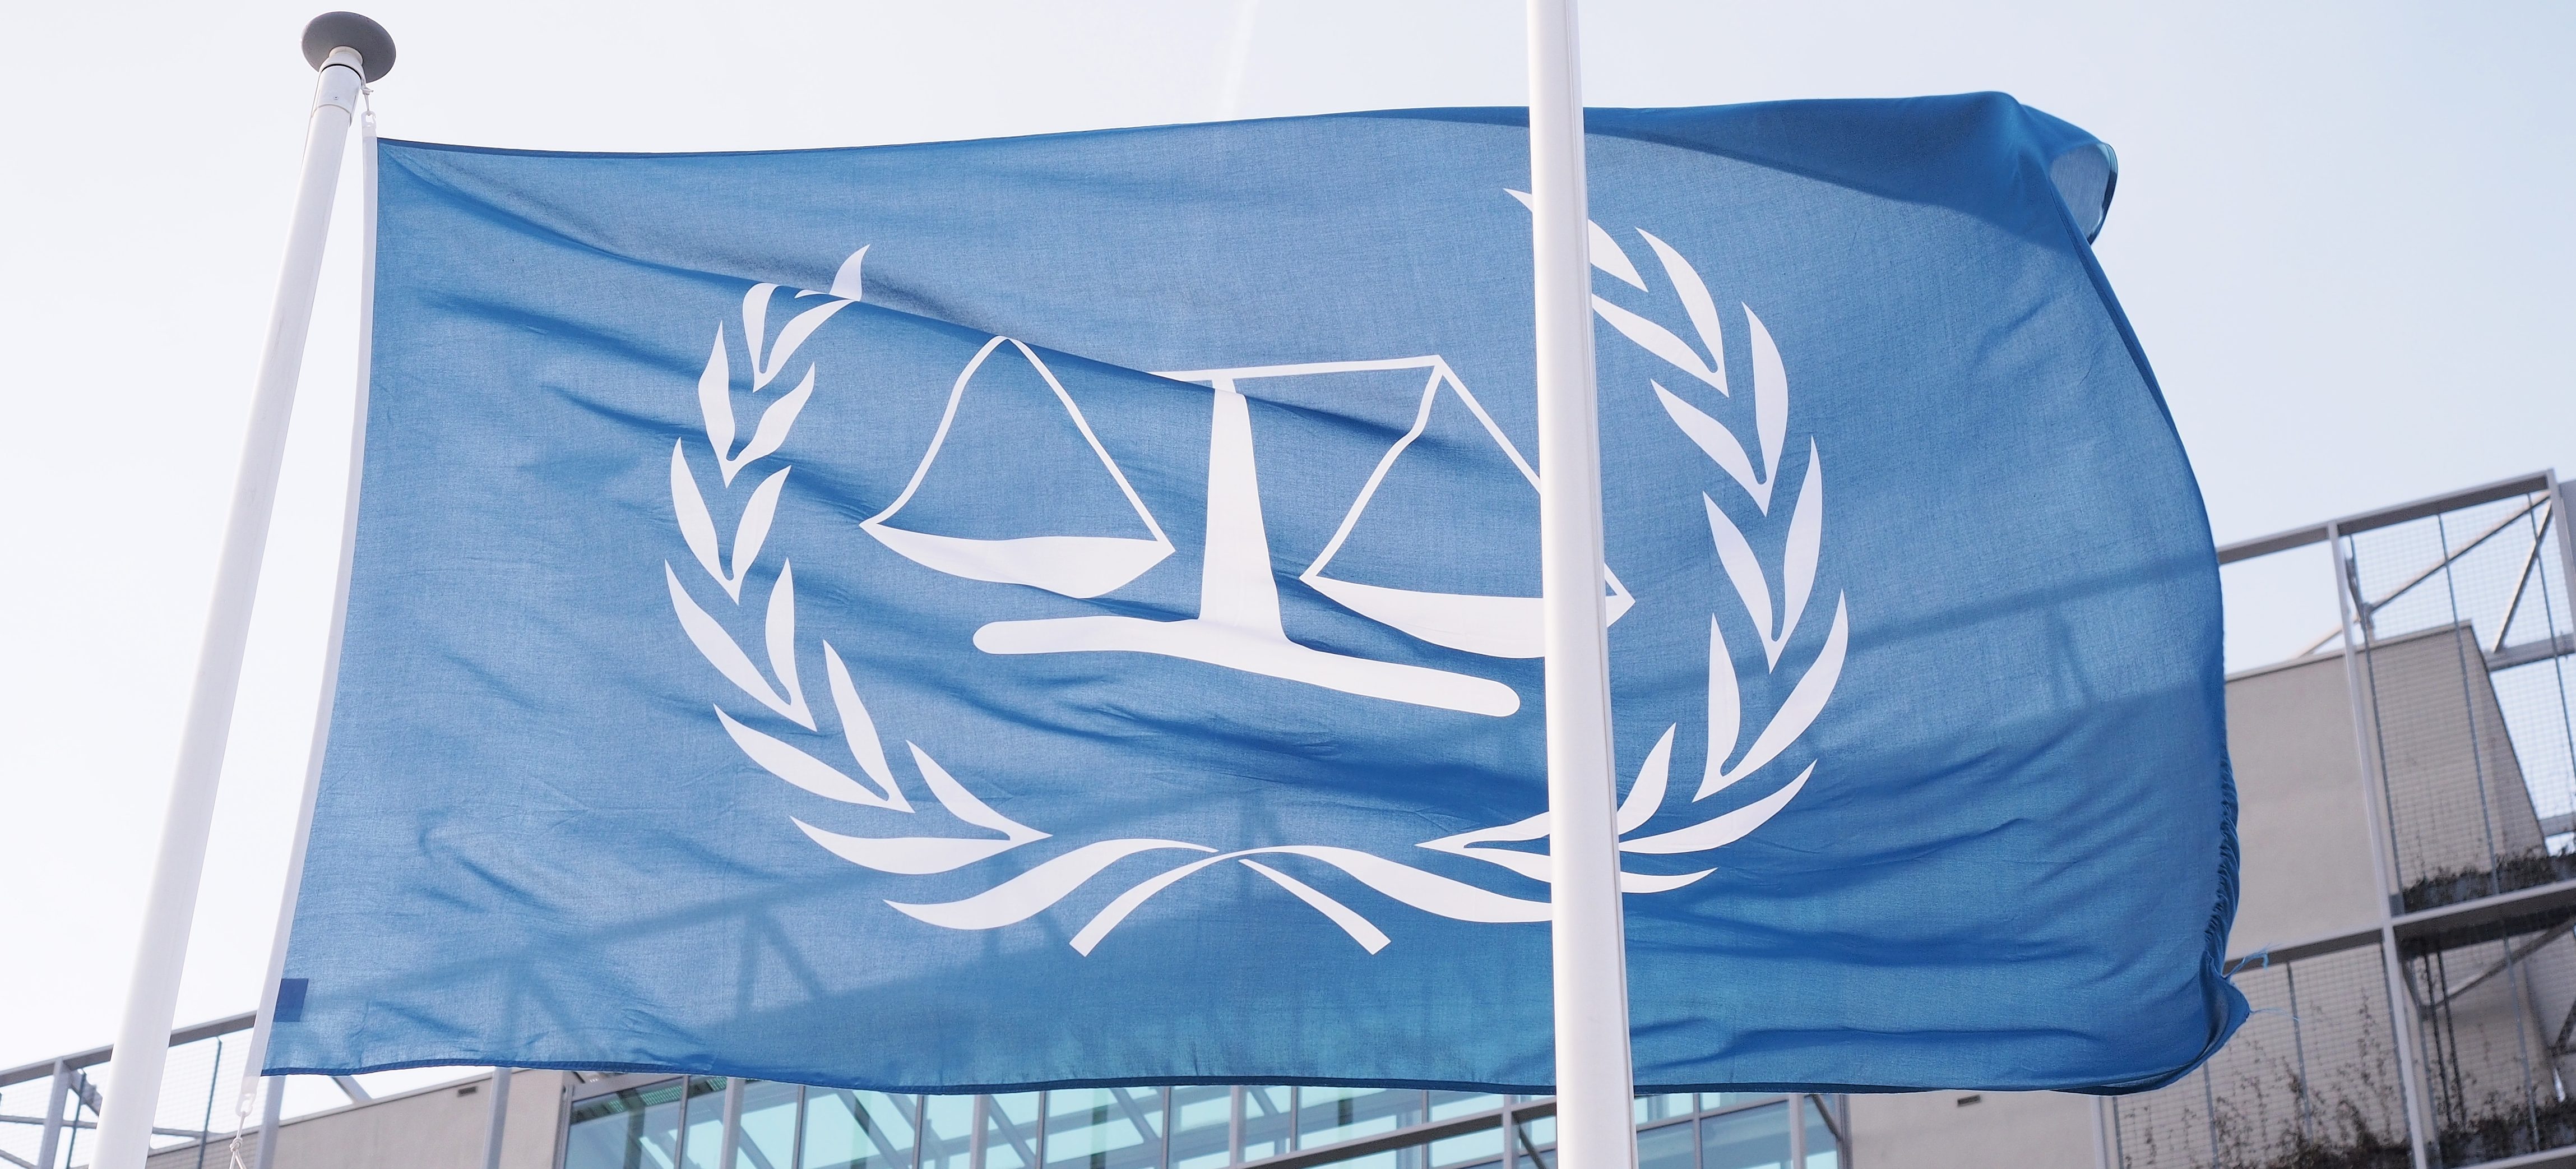 Право флага судна. Международный Уголовный трибунал (Гаага). ООН Гаага Уголовный суд. Международный Уголовный суд ООН здание 2021. Международный Уголовный суд флаг.